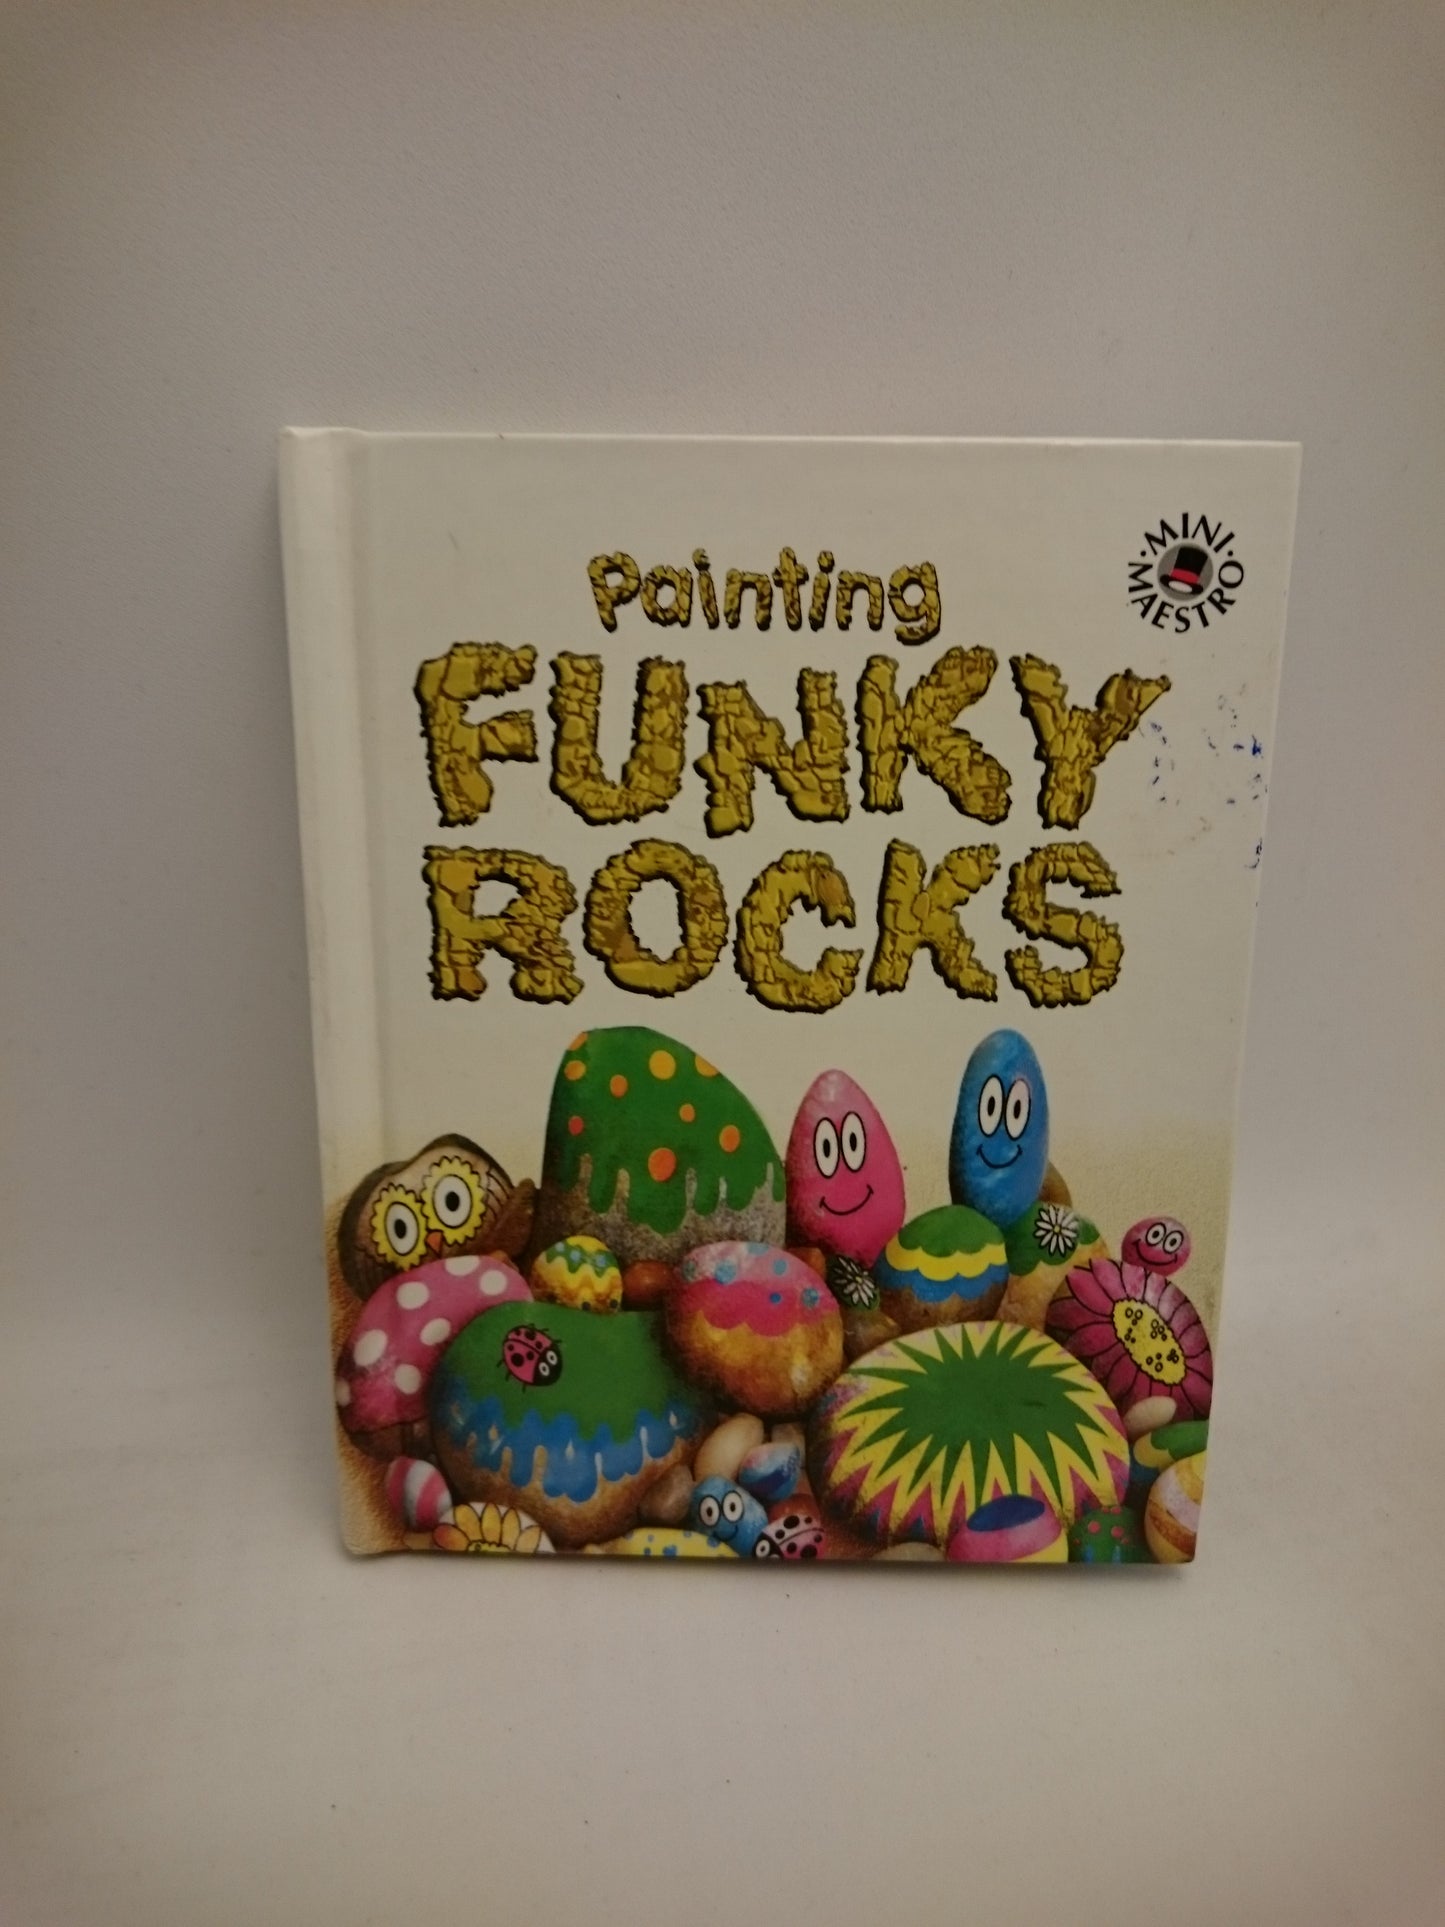 Painting Funky Rocks